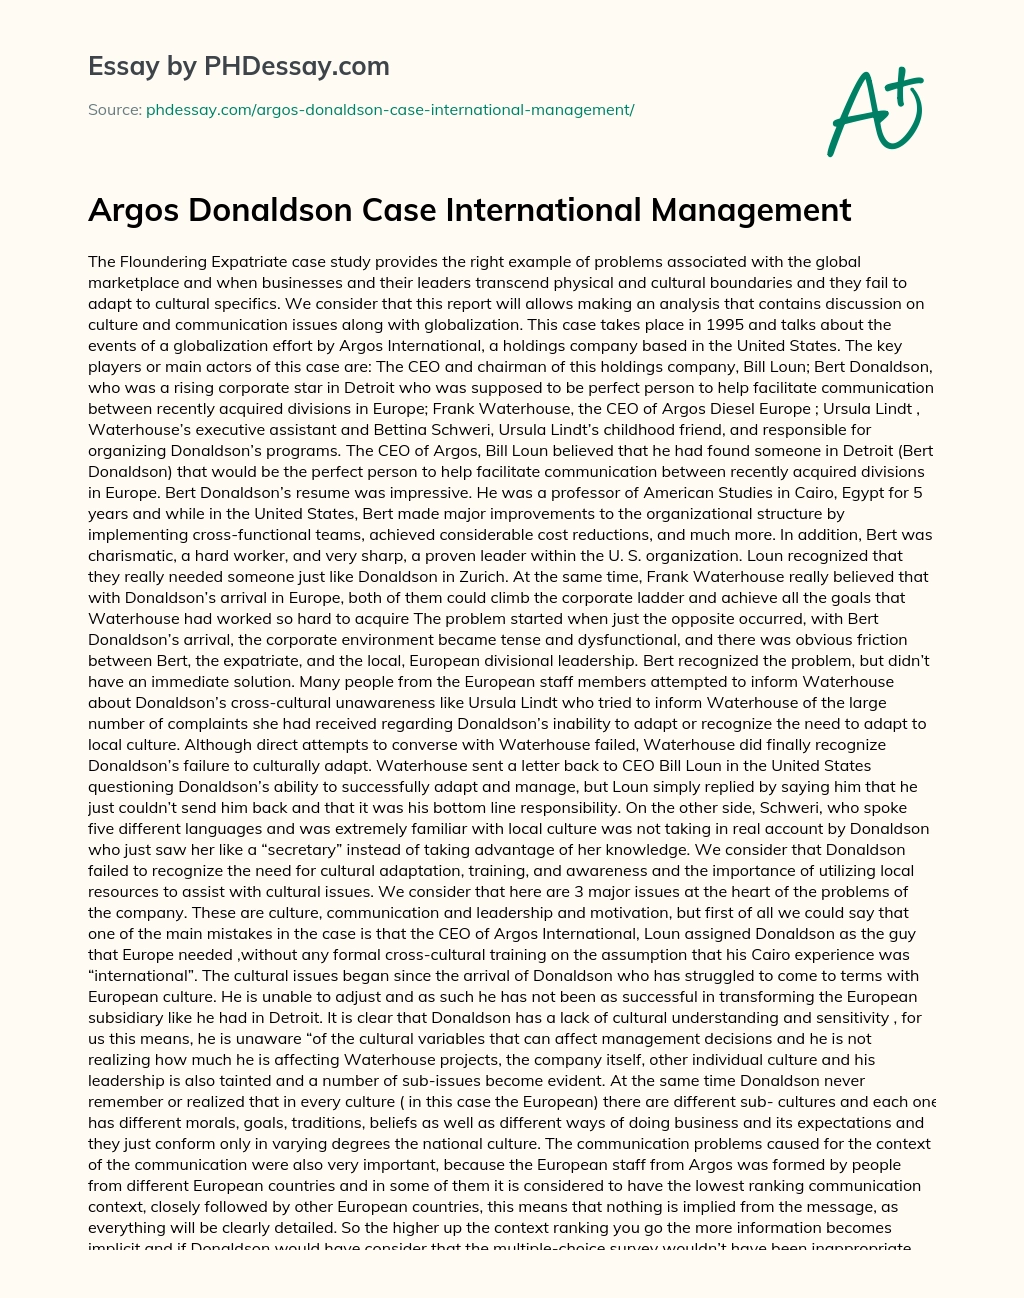 Argos Donaldson Case International Management essay